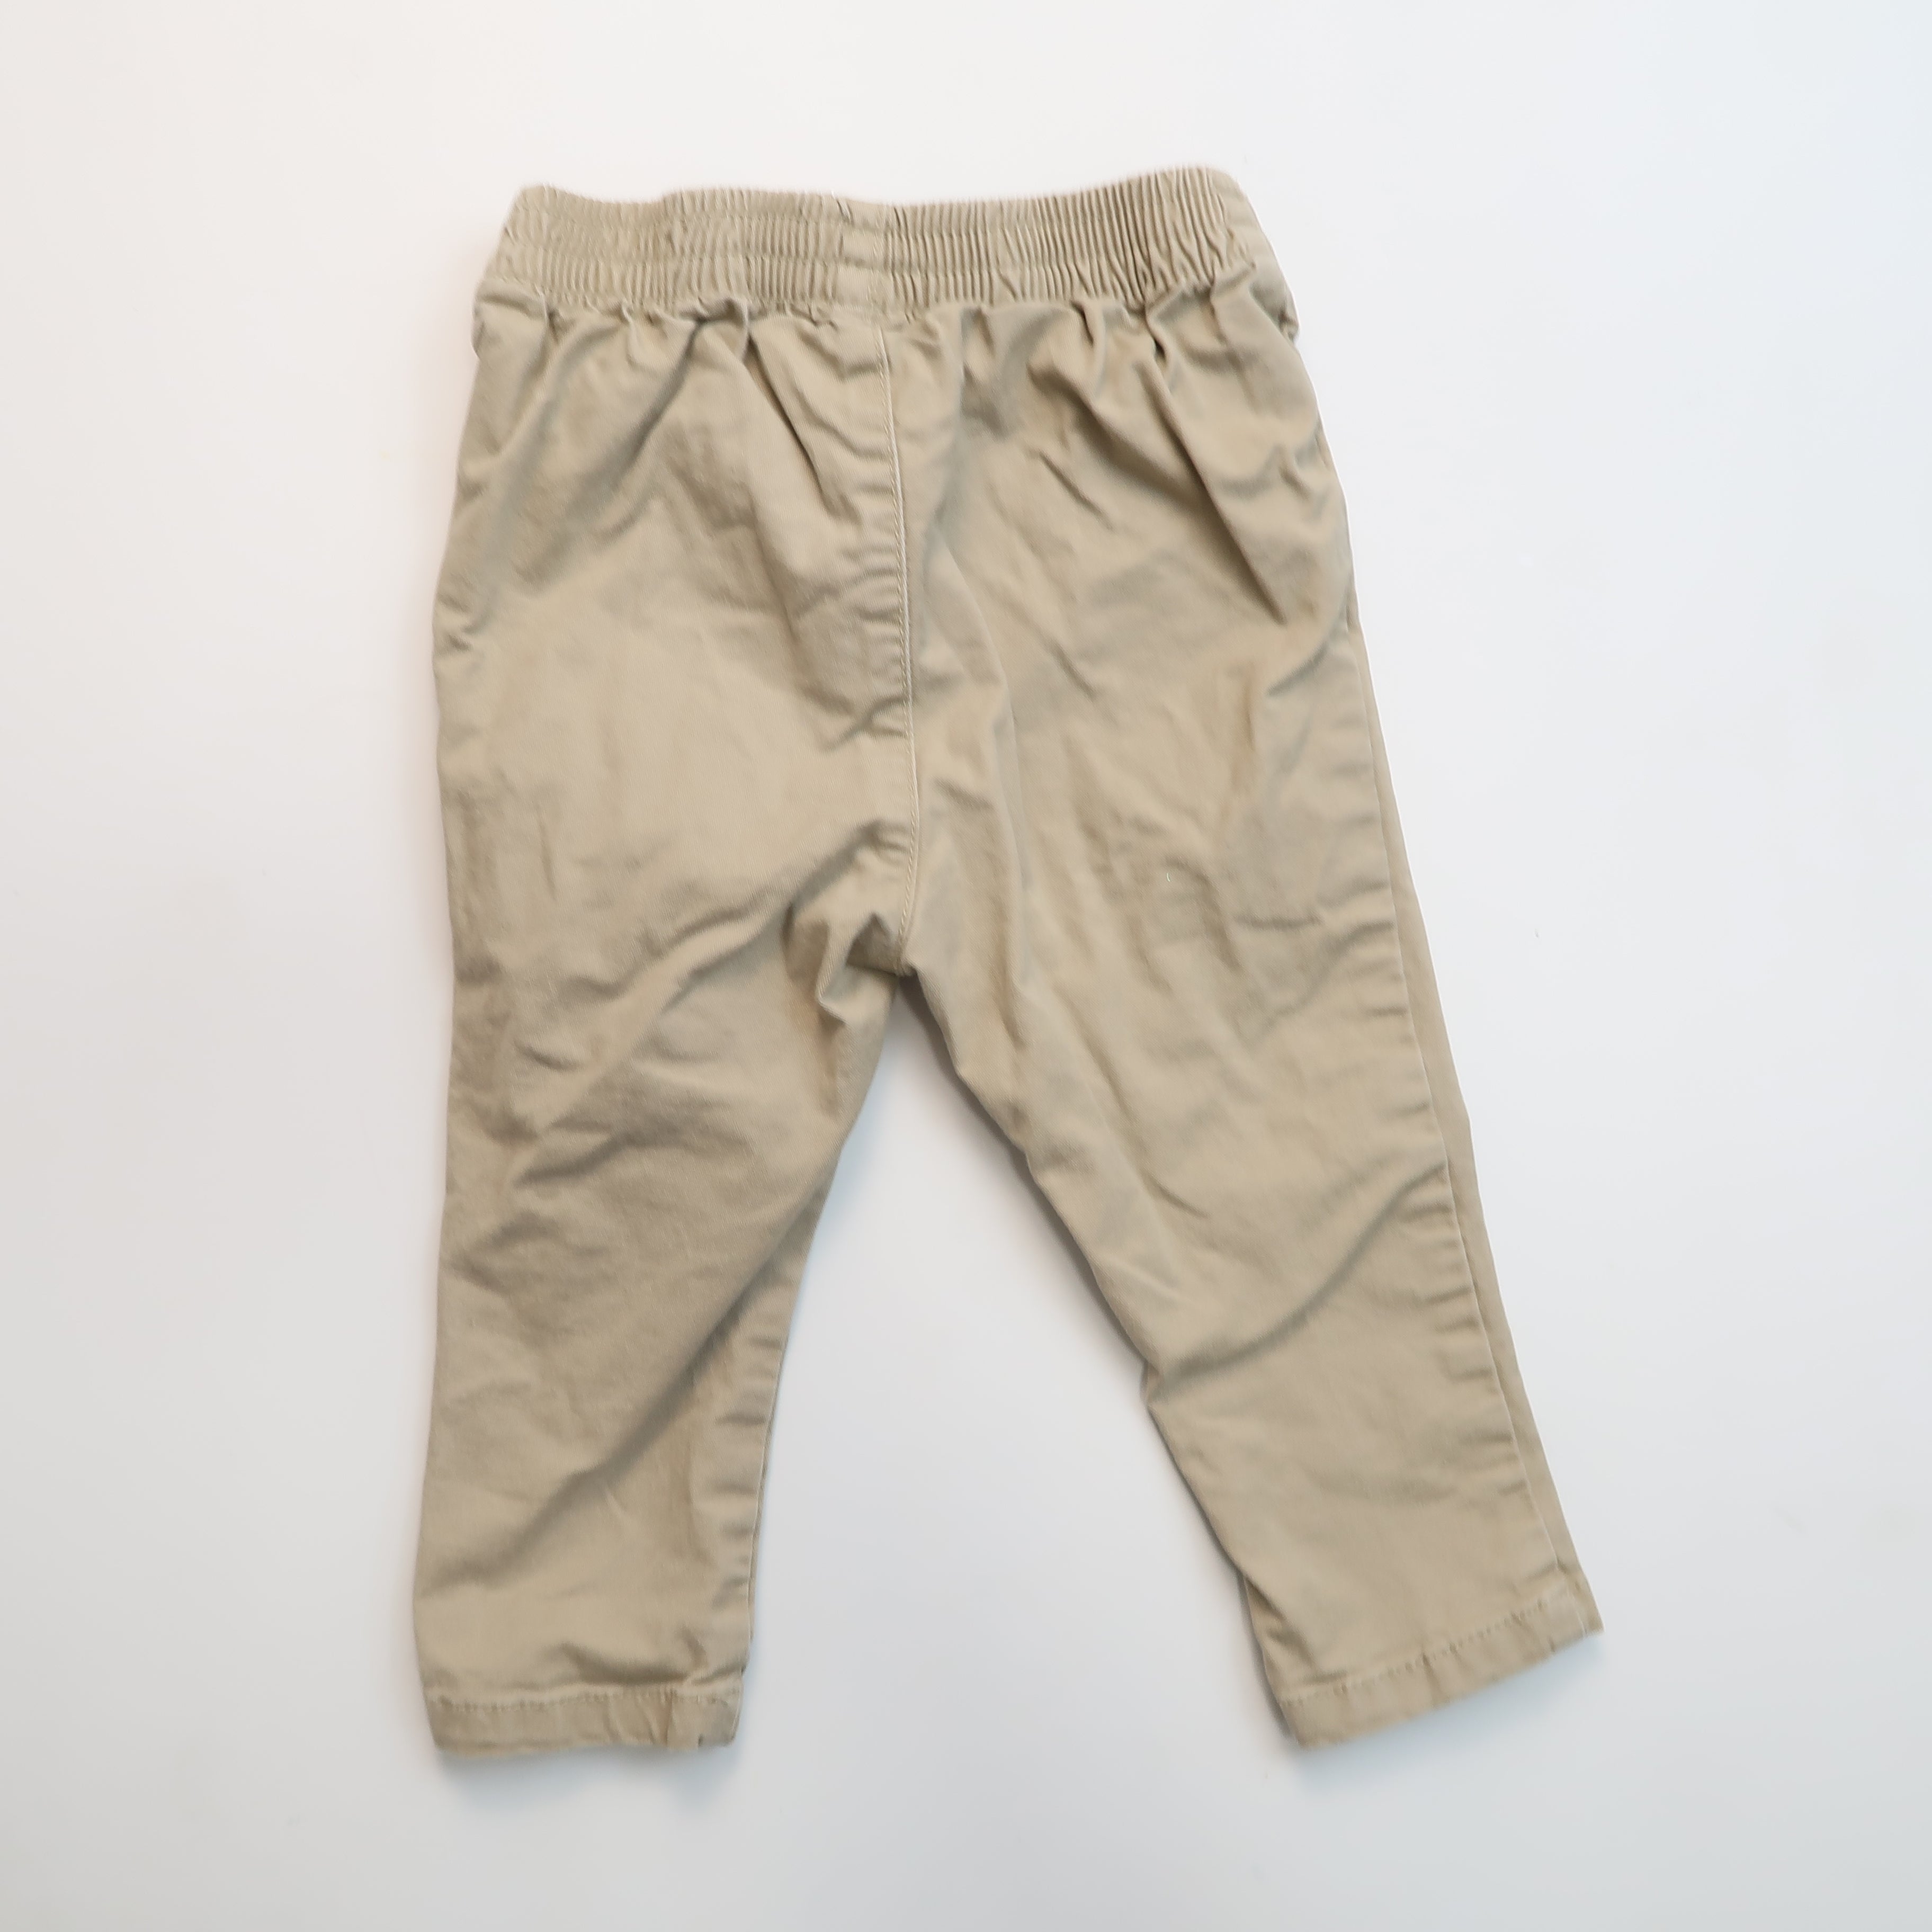 Old Navy - Pants (6-12M)